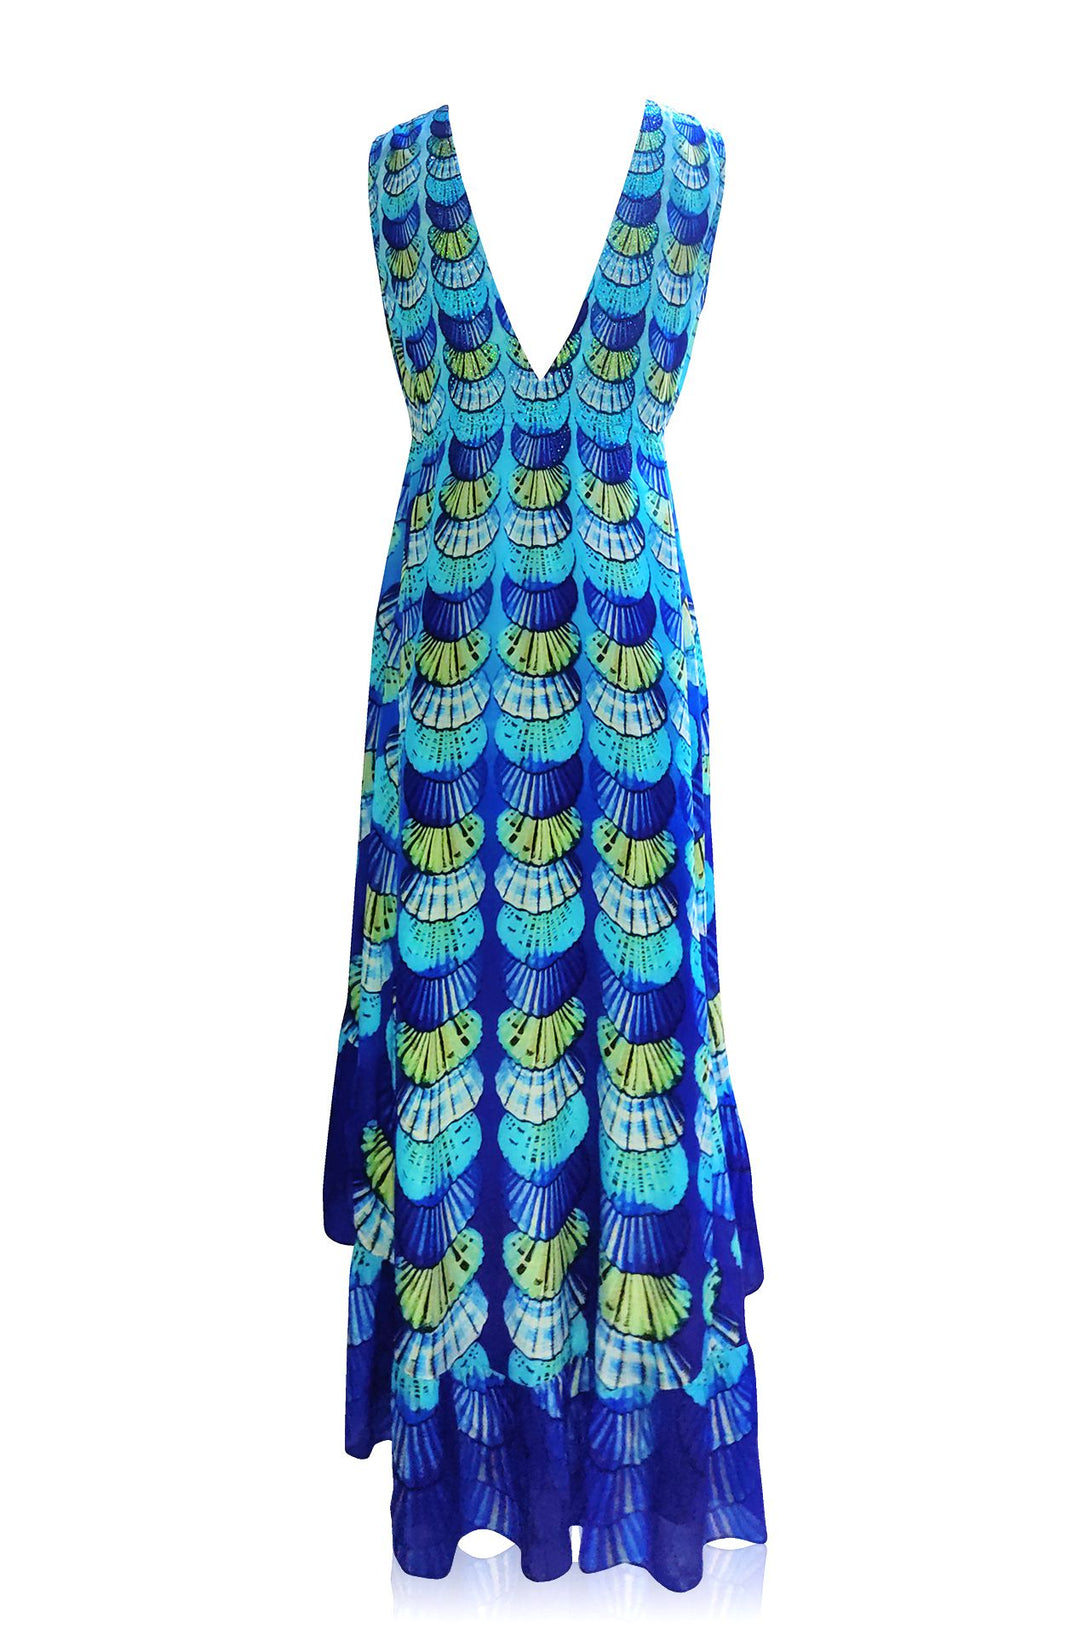 "navy blue plus size formal dress" "summer maxi dress" "Shahida Parides" "flowy maxi dress"